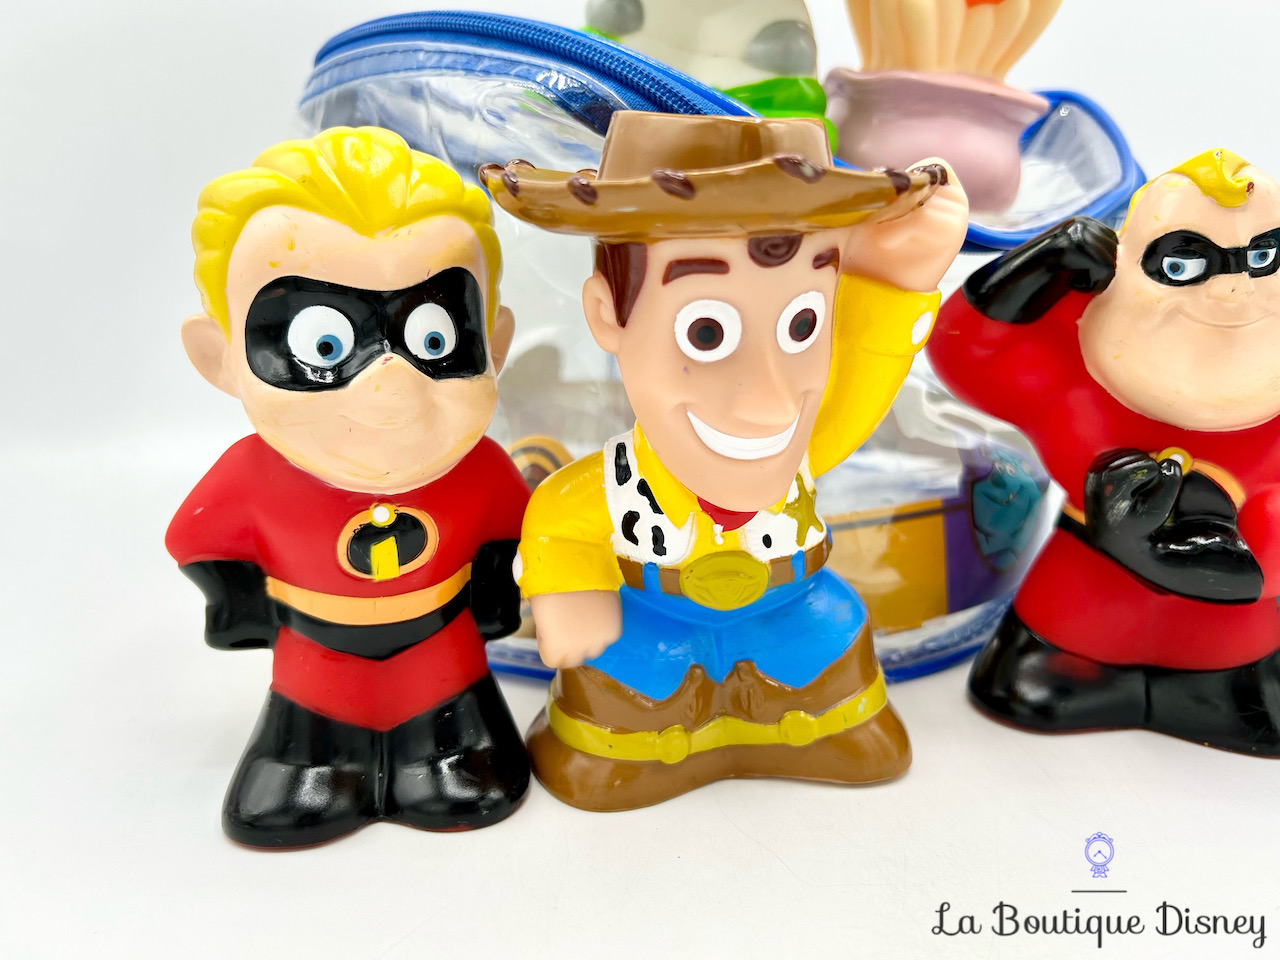 jouets-figurines-de-bain-pixar-indestrutibles-sulli-toy-story-némo-disneyland-paris-disney-pochette-4